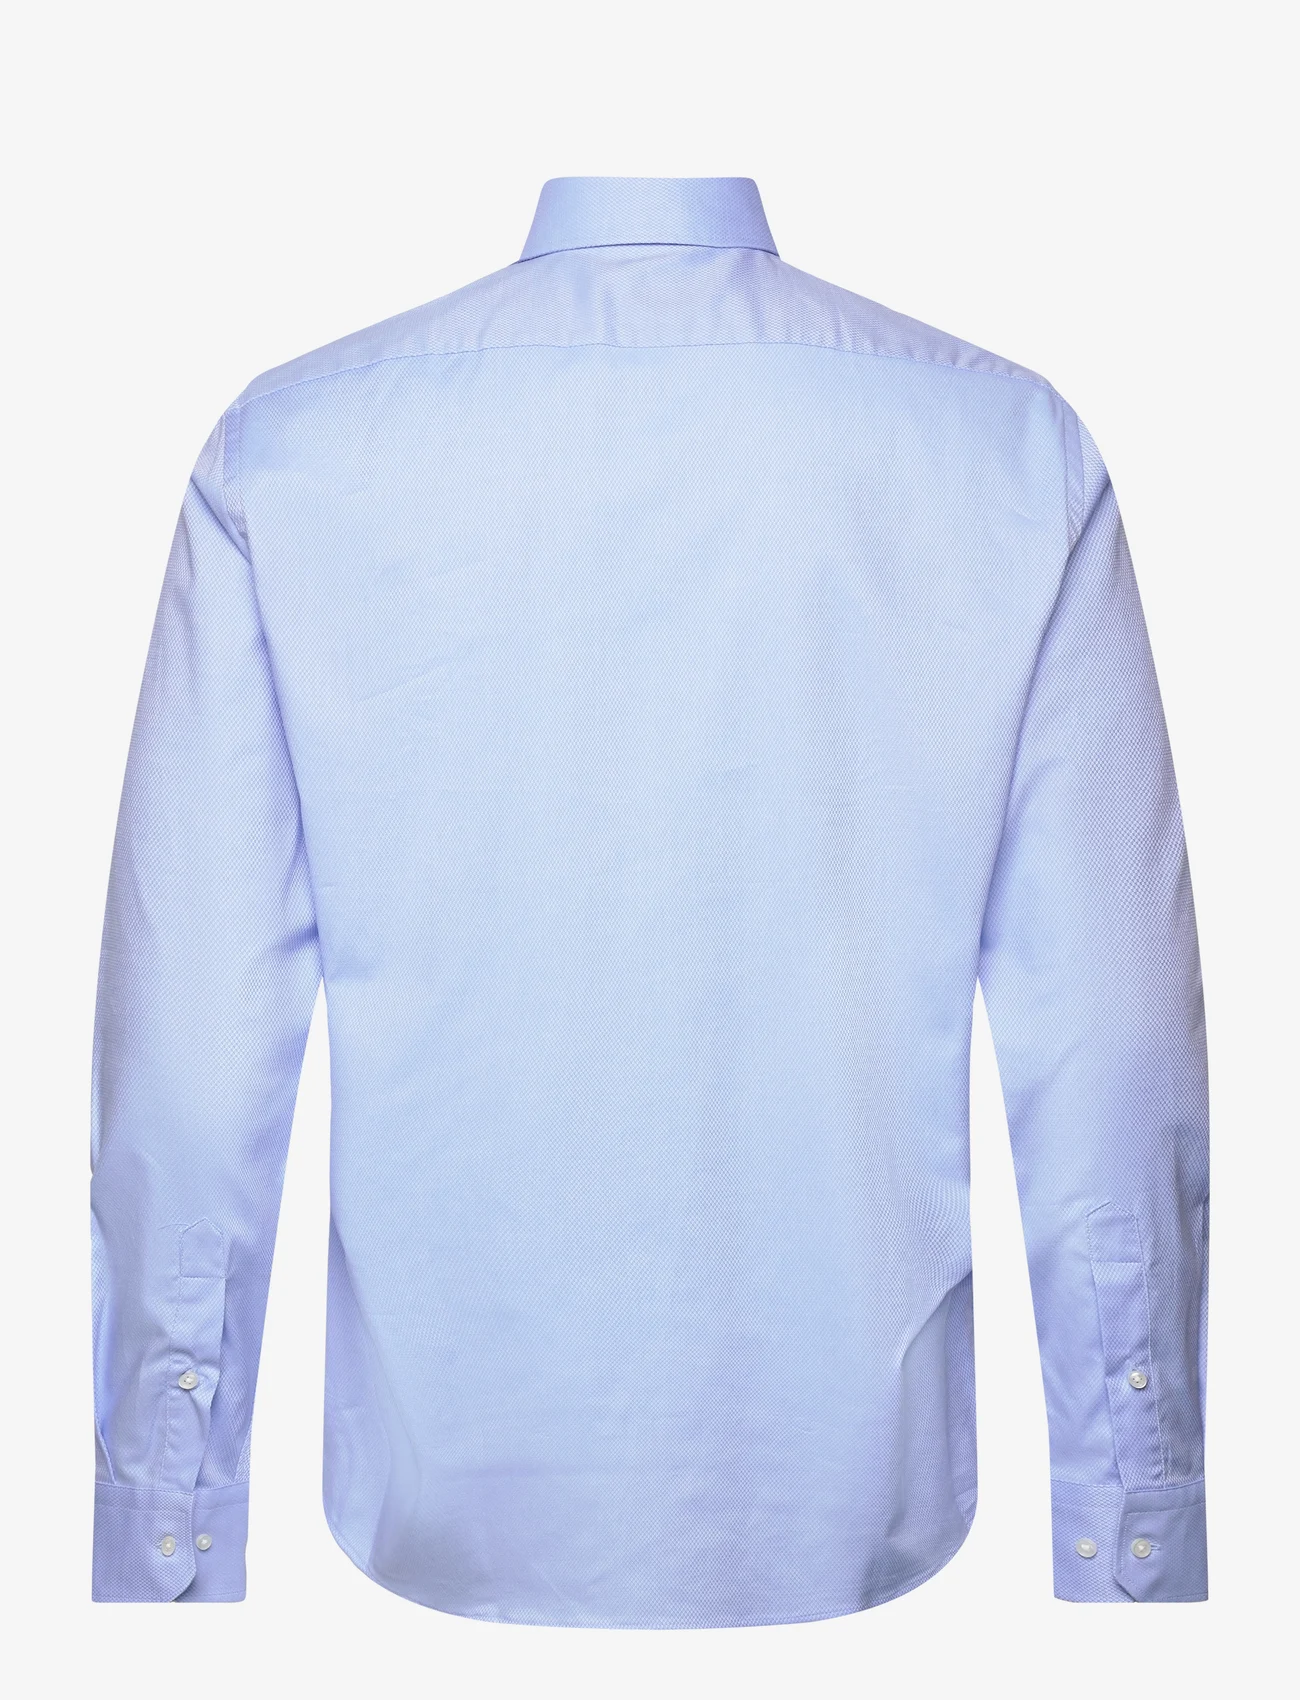 BOSS - H-JOE-kent-C1-214 - basic shirts - light/pastel blue - 1